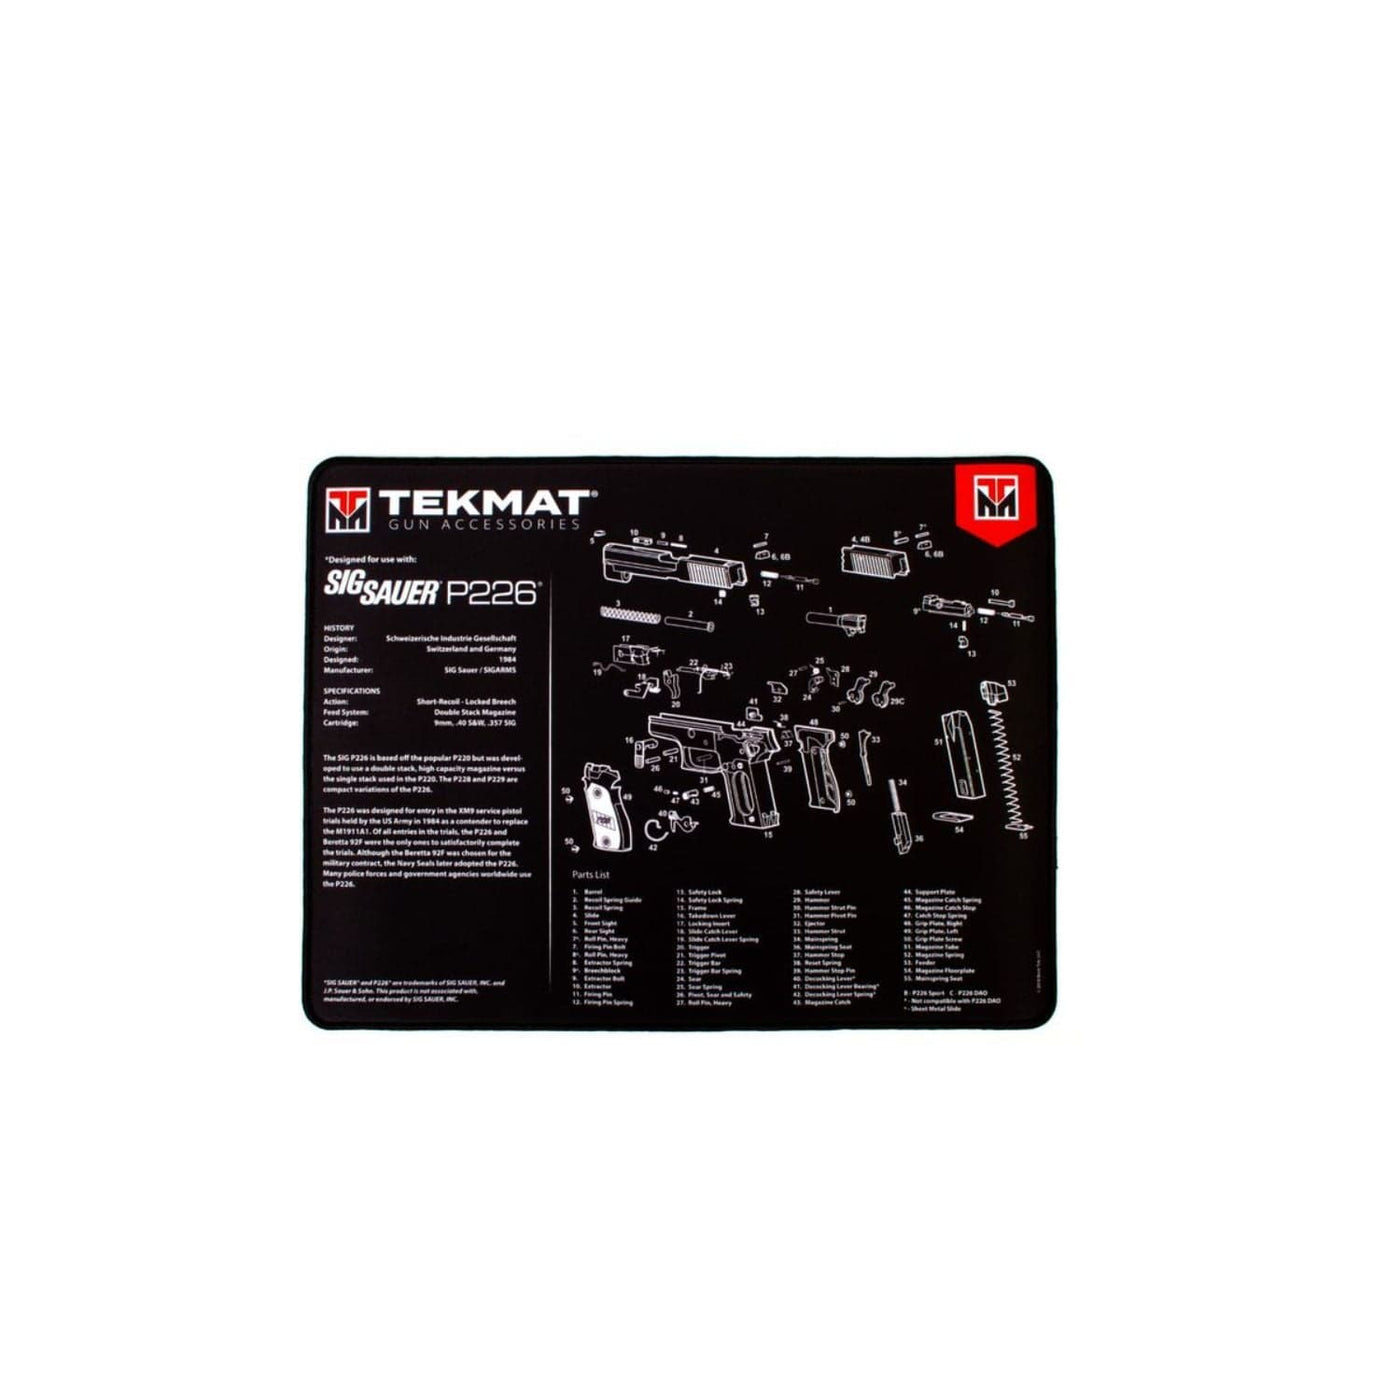 TekMat TekMat Ultra 20 Sig Sauer P226 Gun Cleaning Mat Shooting